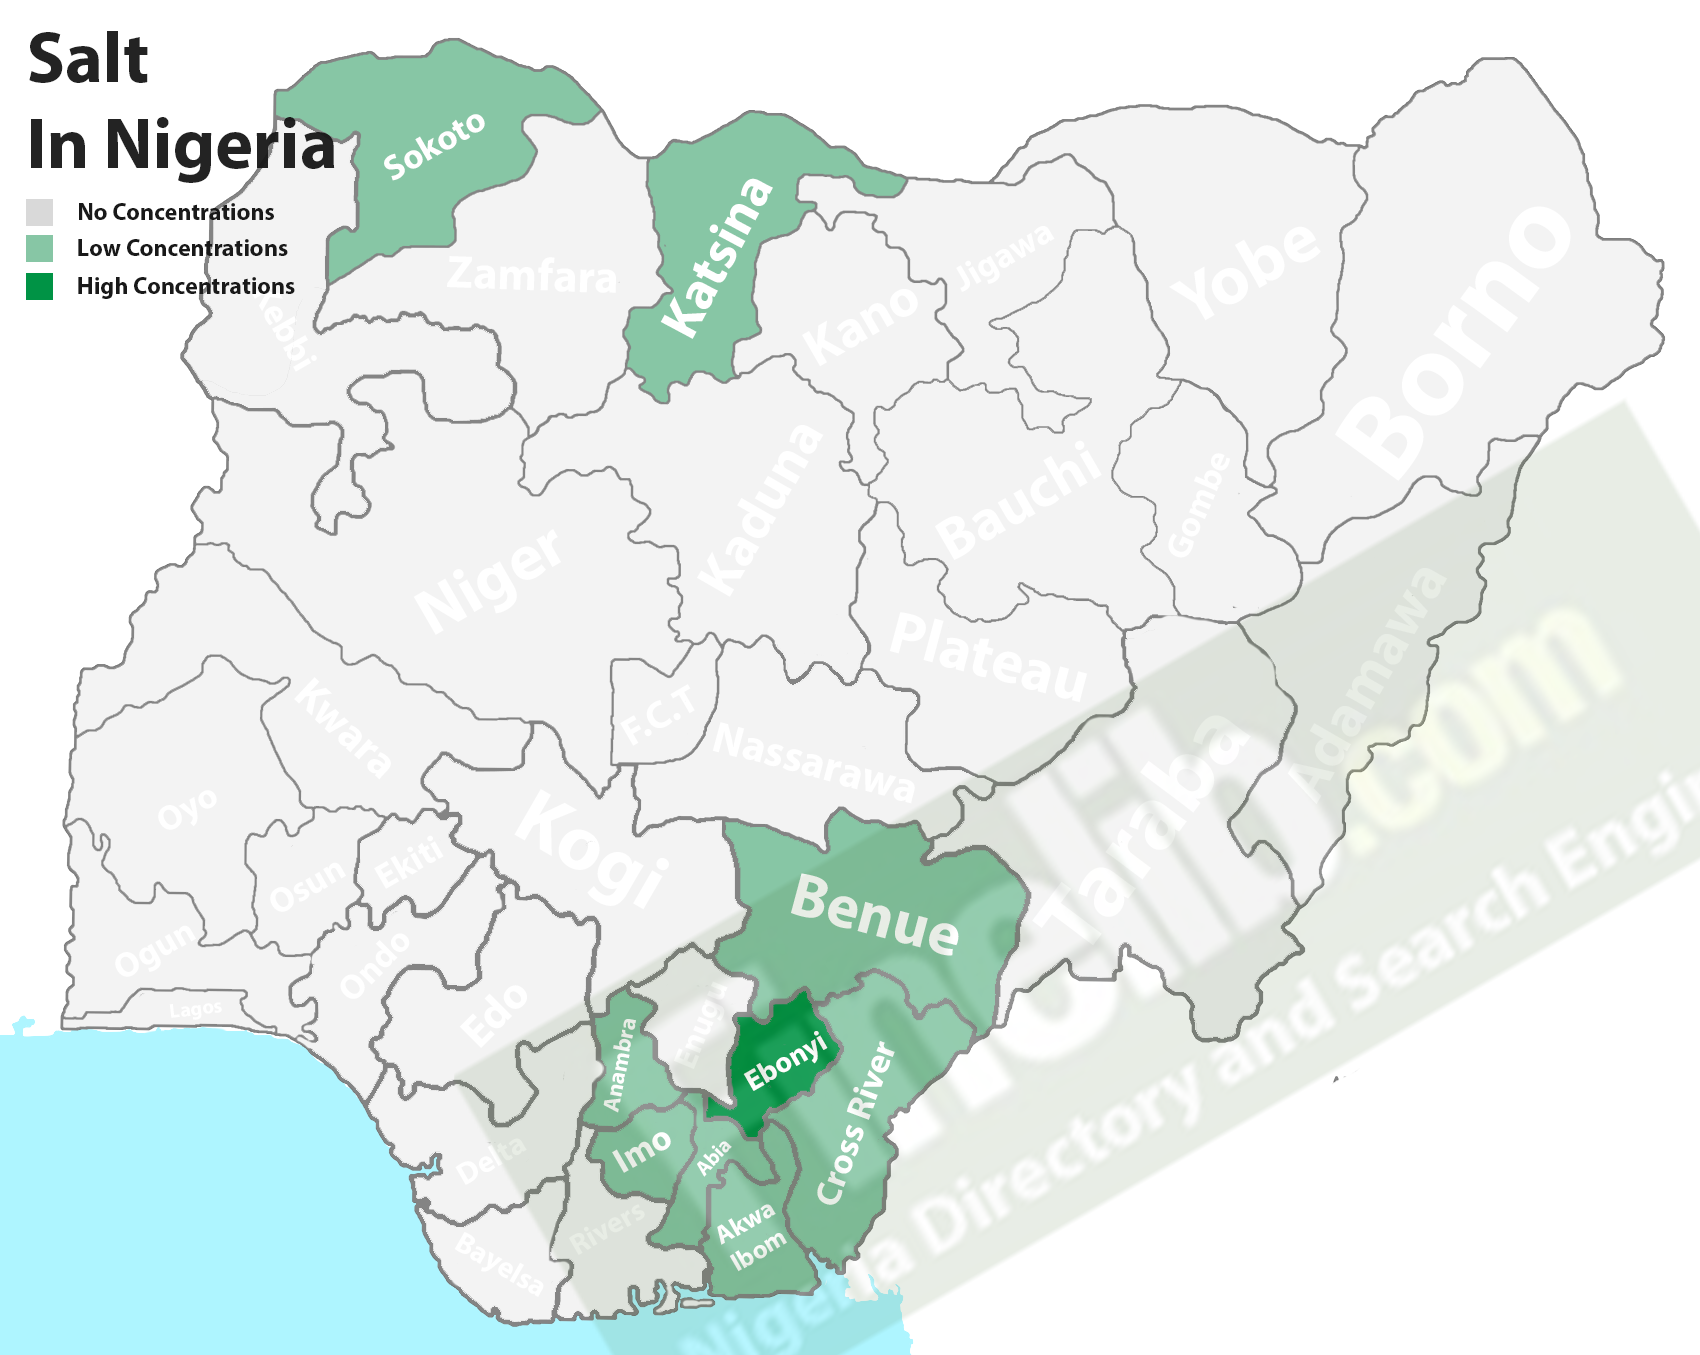 Salt mineral deposits in Nigeria